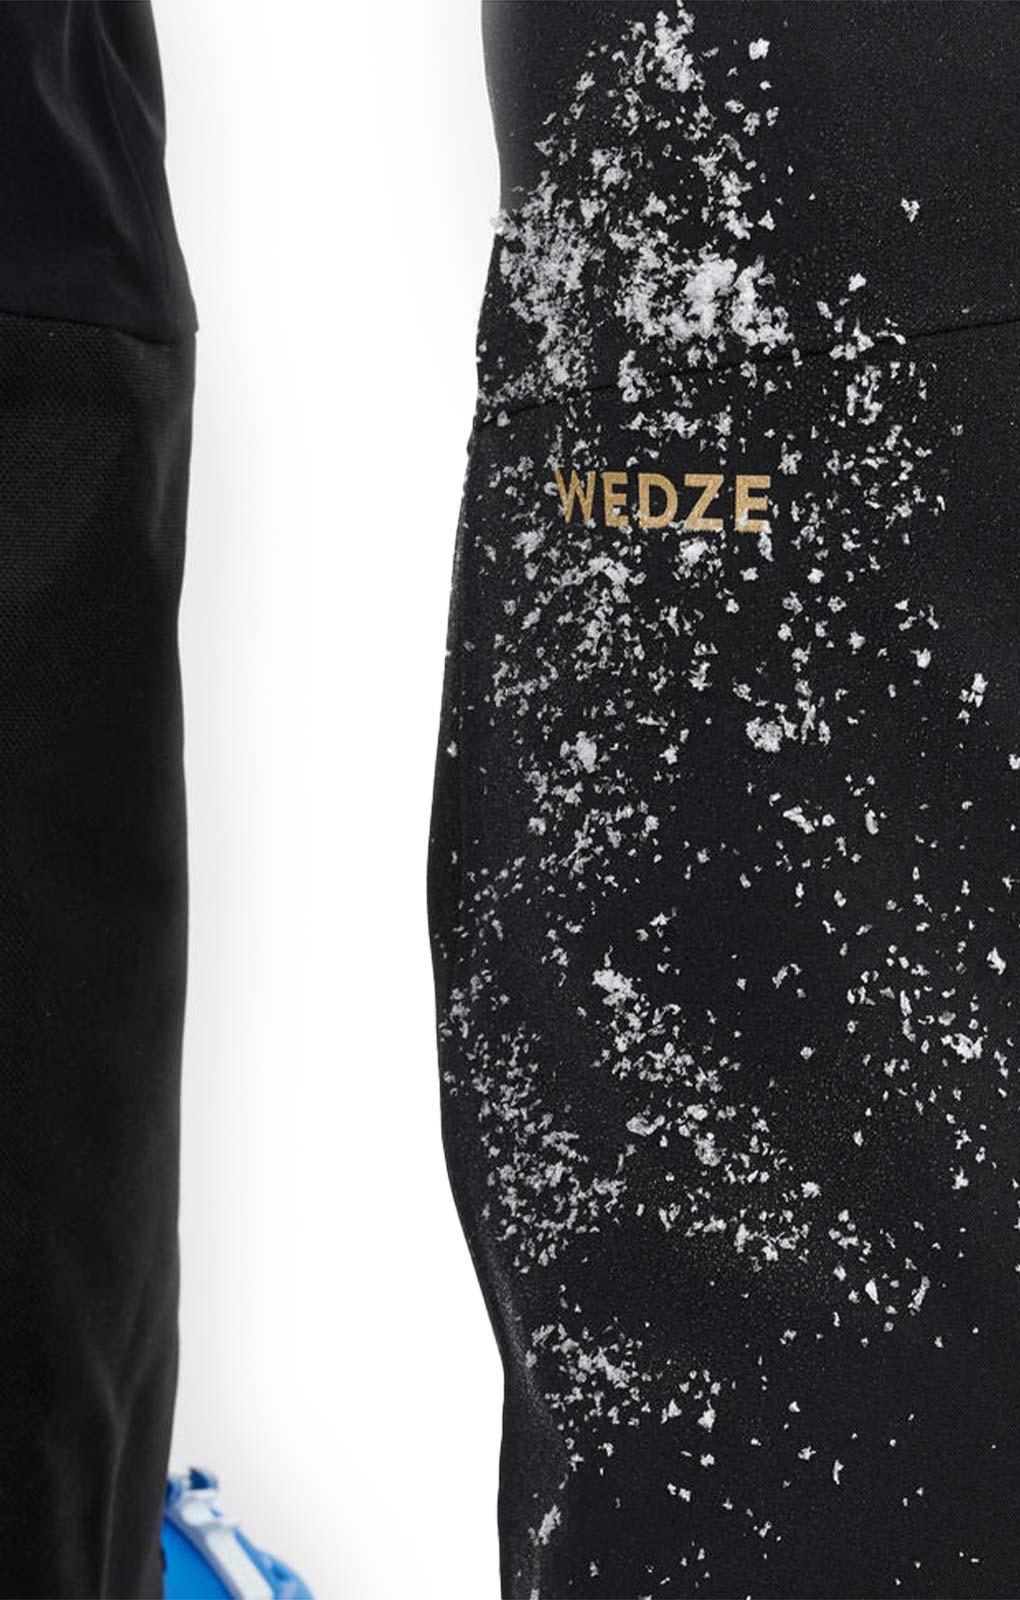 Decathlon Black Women's Piste Ski Trousers product image